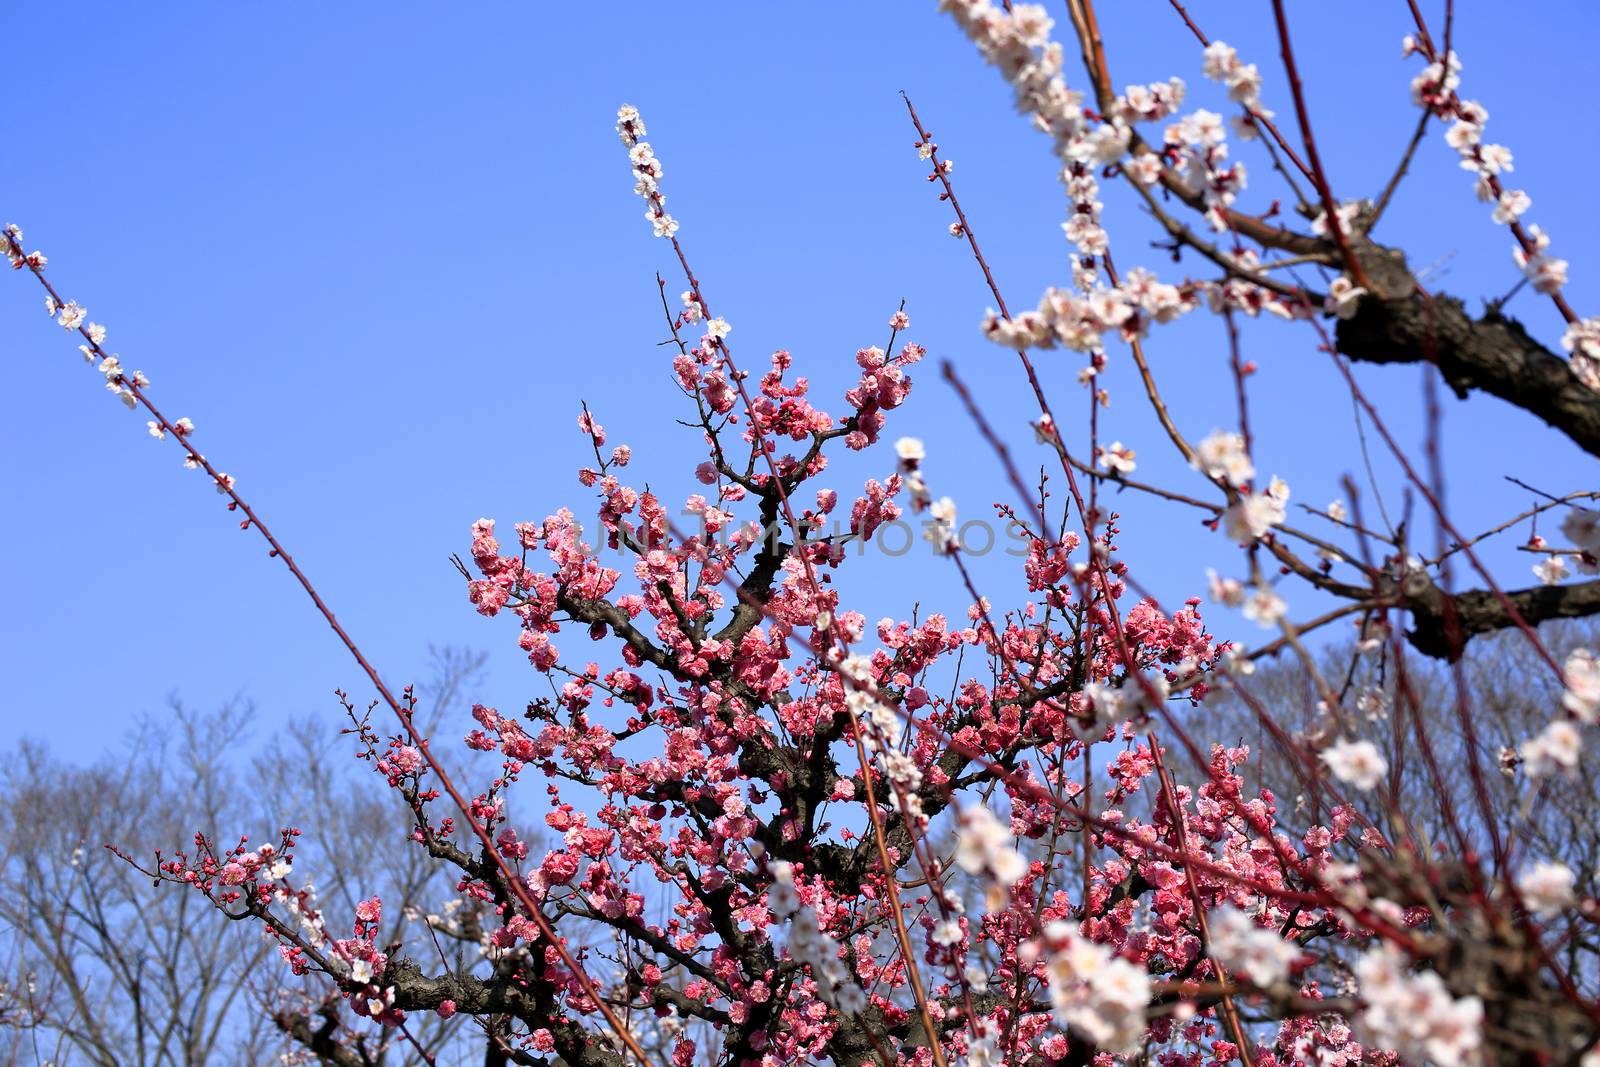 Plum blossom in spring season